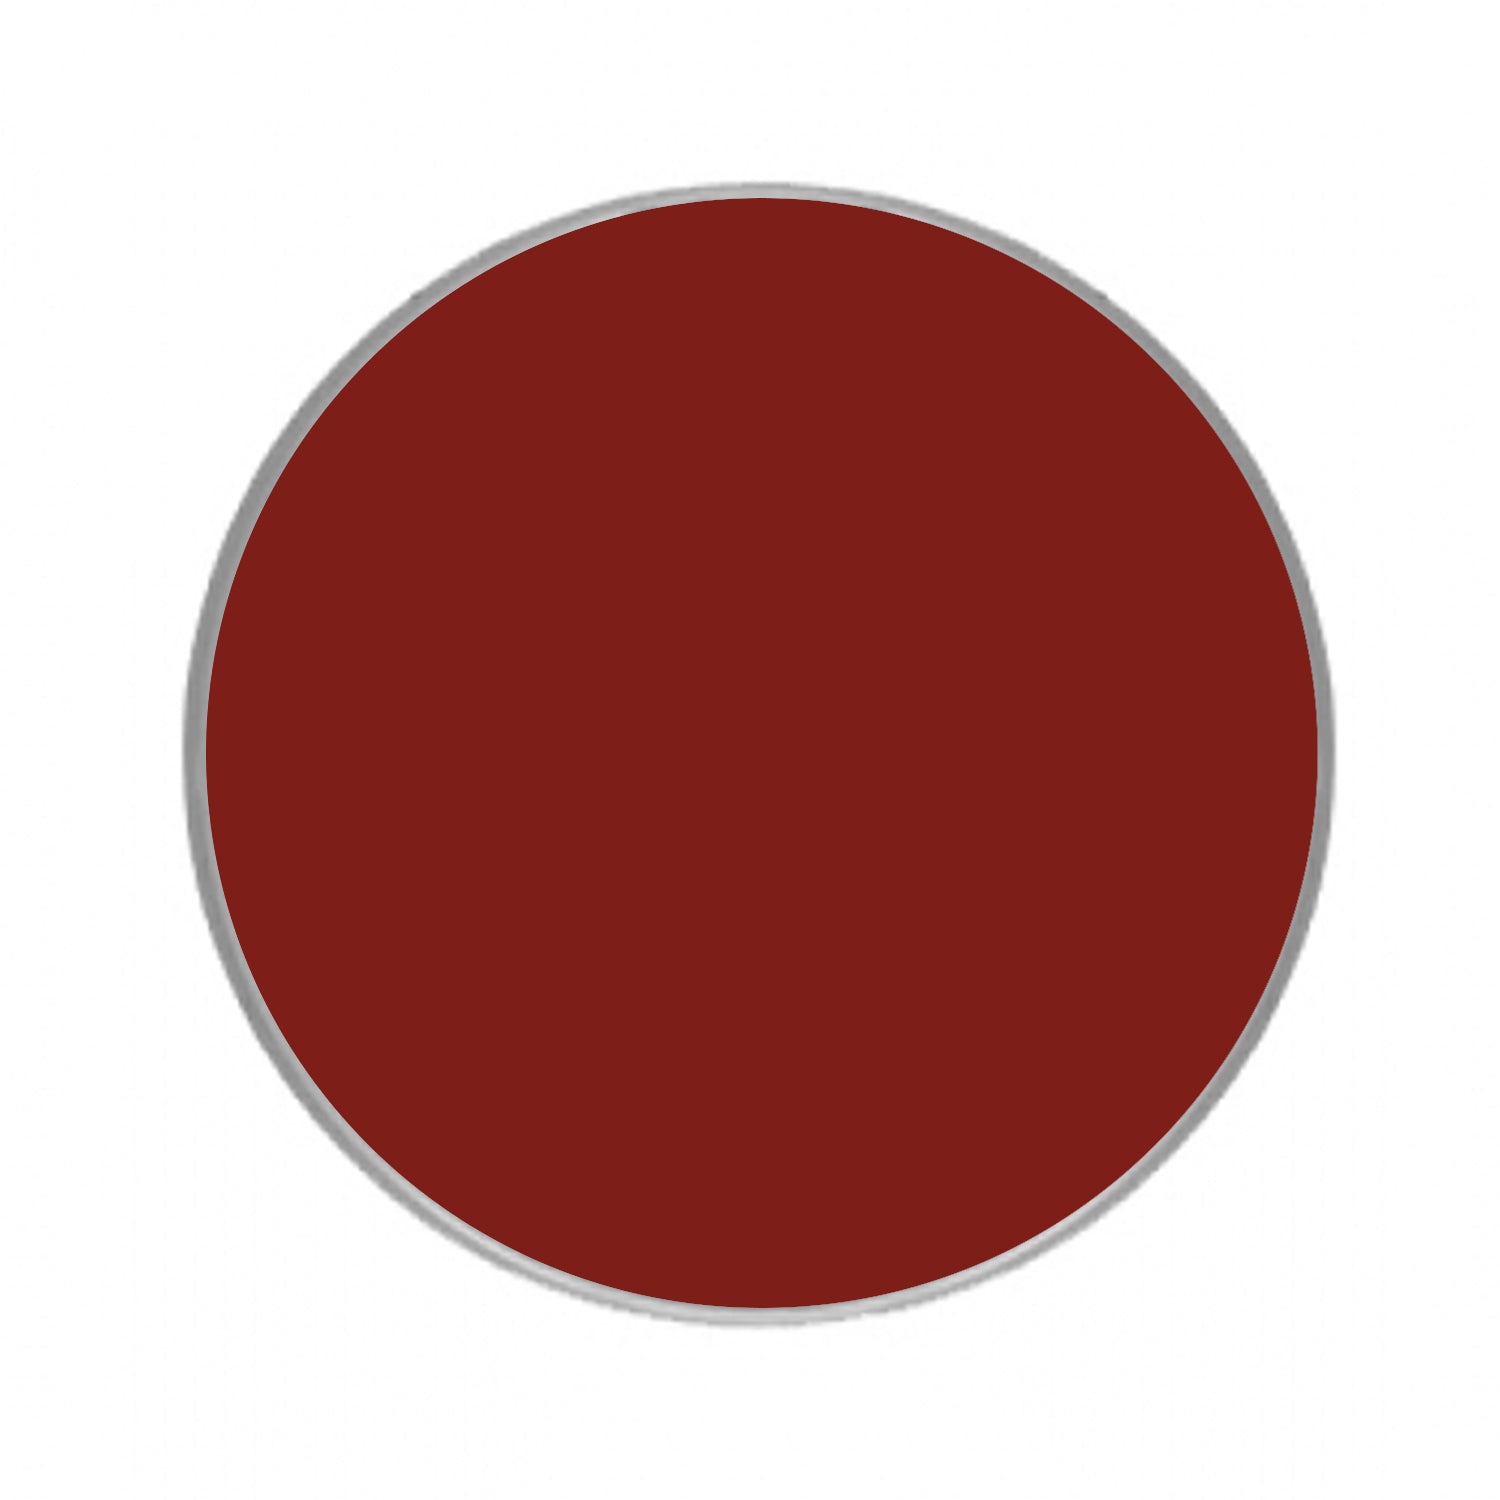 Kryolan Aquacolor Red Face Paints - Dark Red 81 (30 ml)